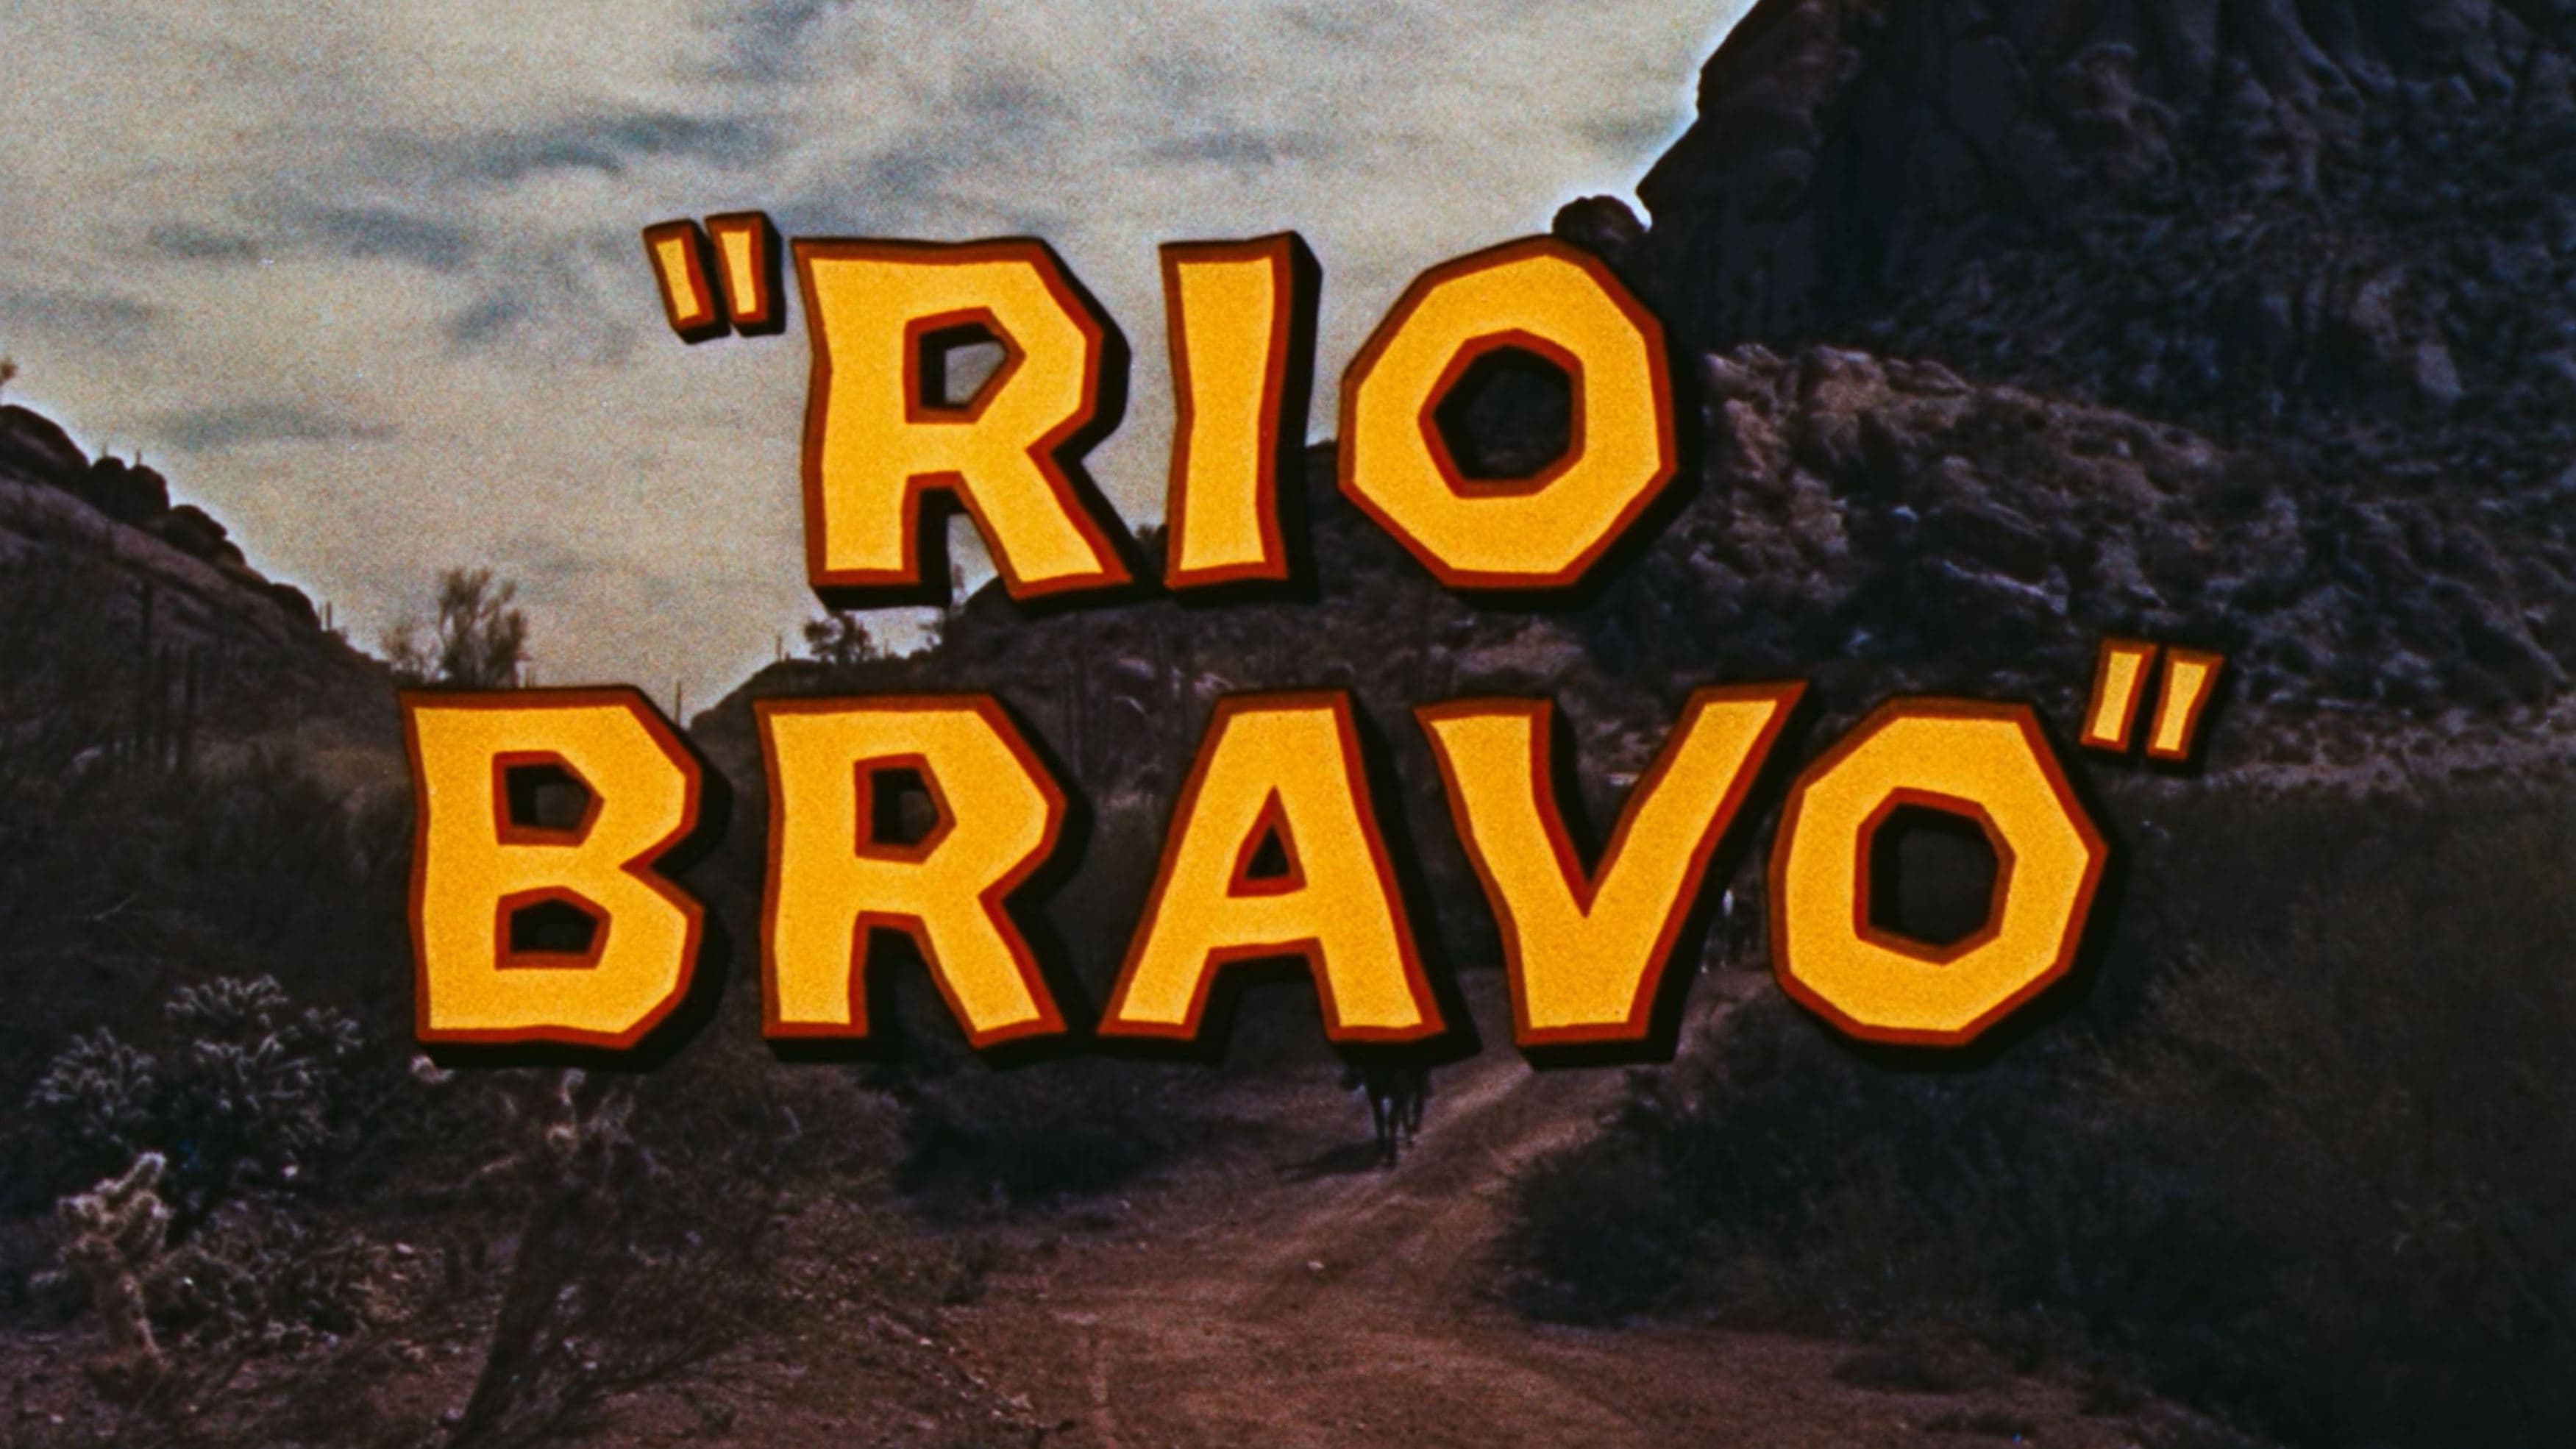 Image du film Rio Bravo tt5yh2gvucbwgssevy4a63w24eqjpg